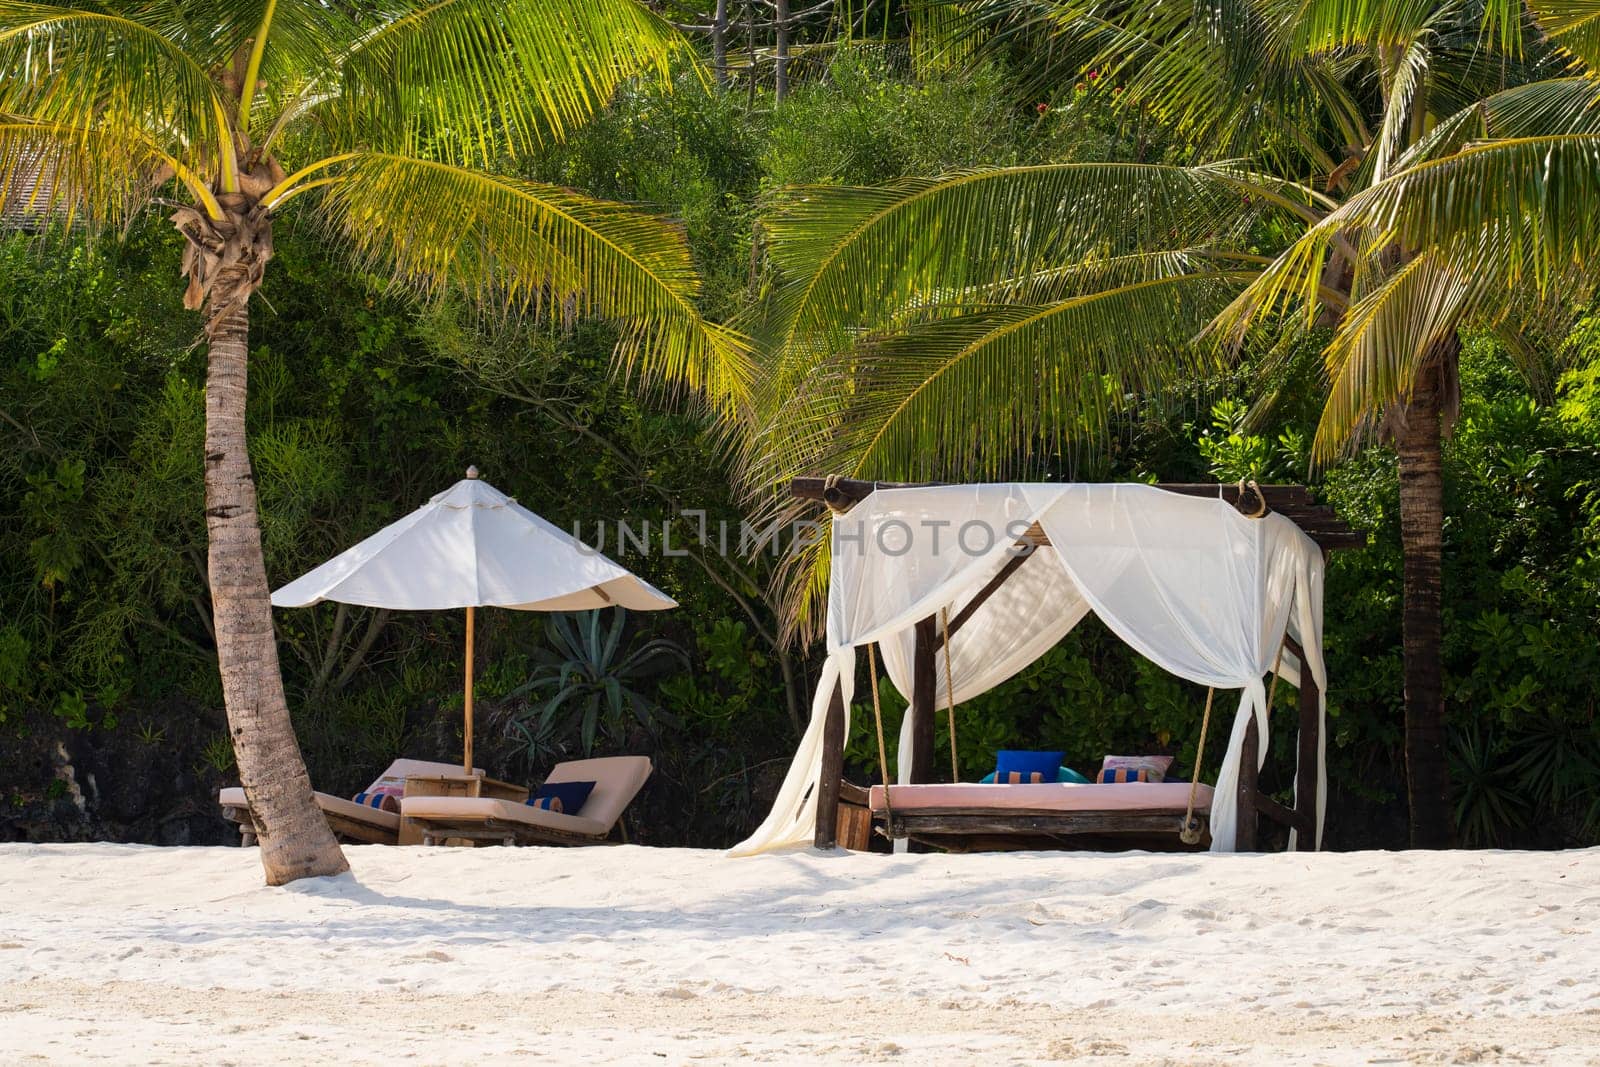 Luxury beach canopies and white beach parasol on the beach at sunset by Robertobinetti70